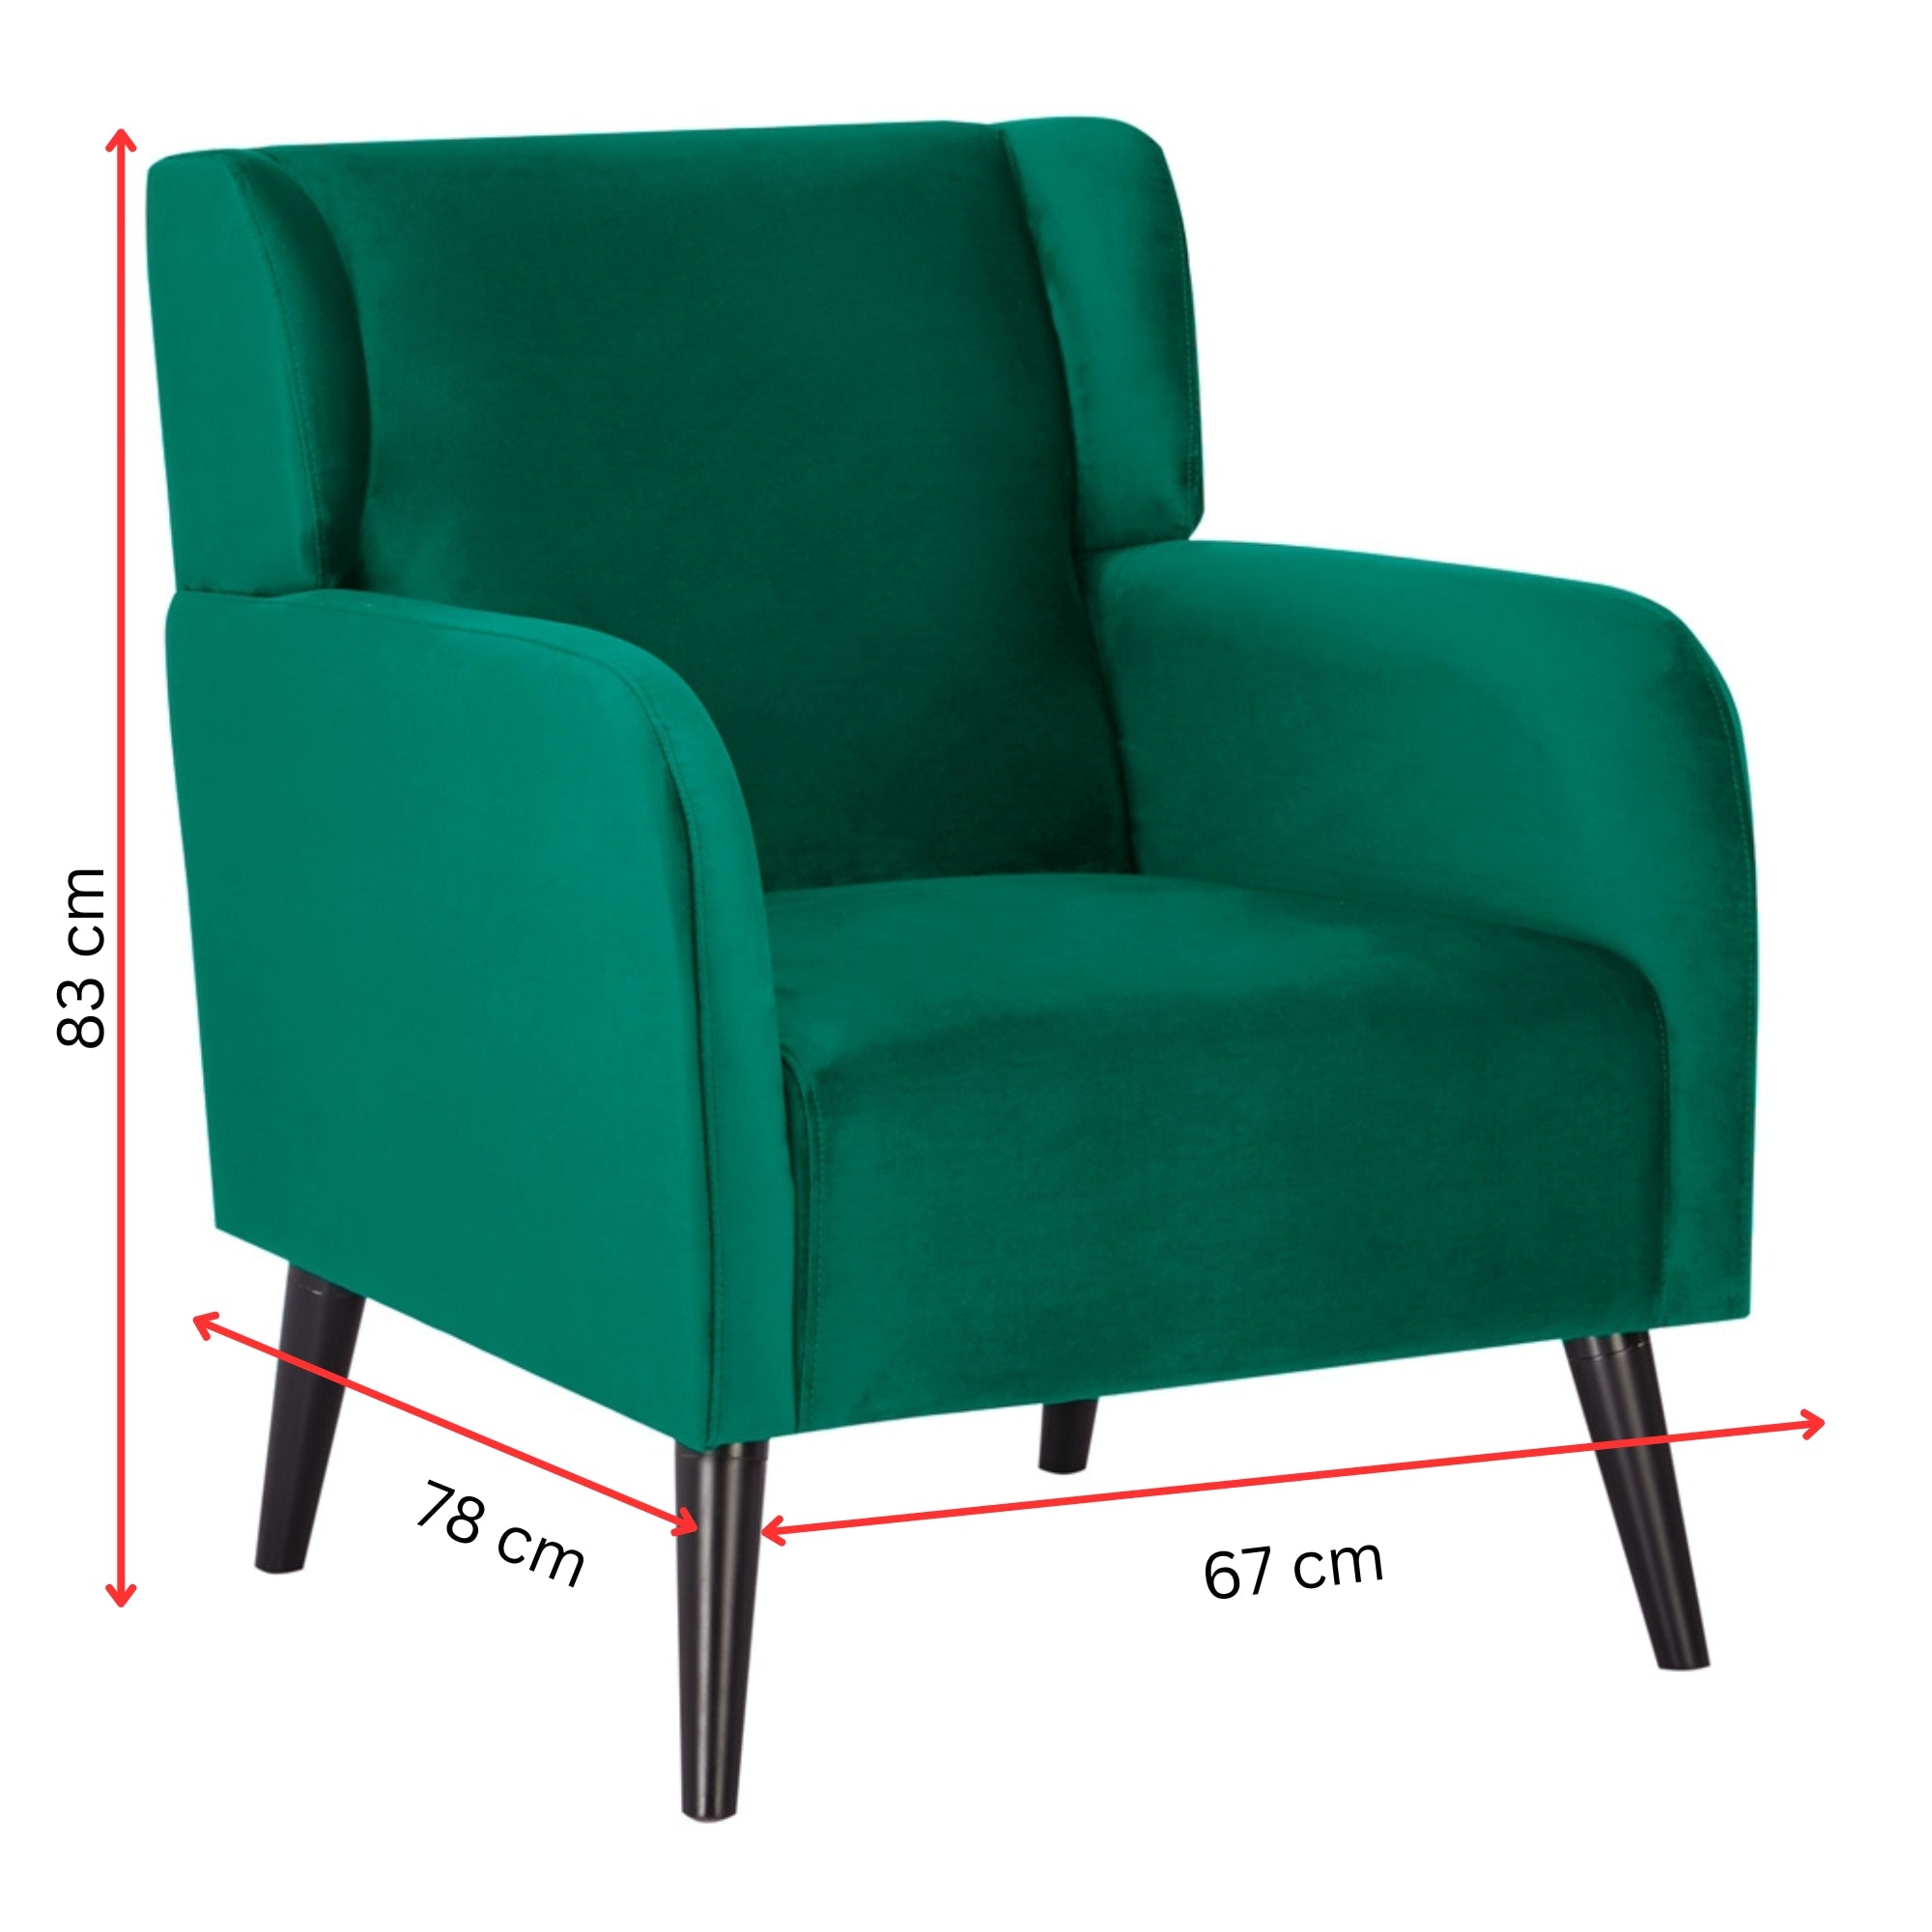 Scandinavian Green Fabric Arm Chair, Durable Pine Frame